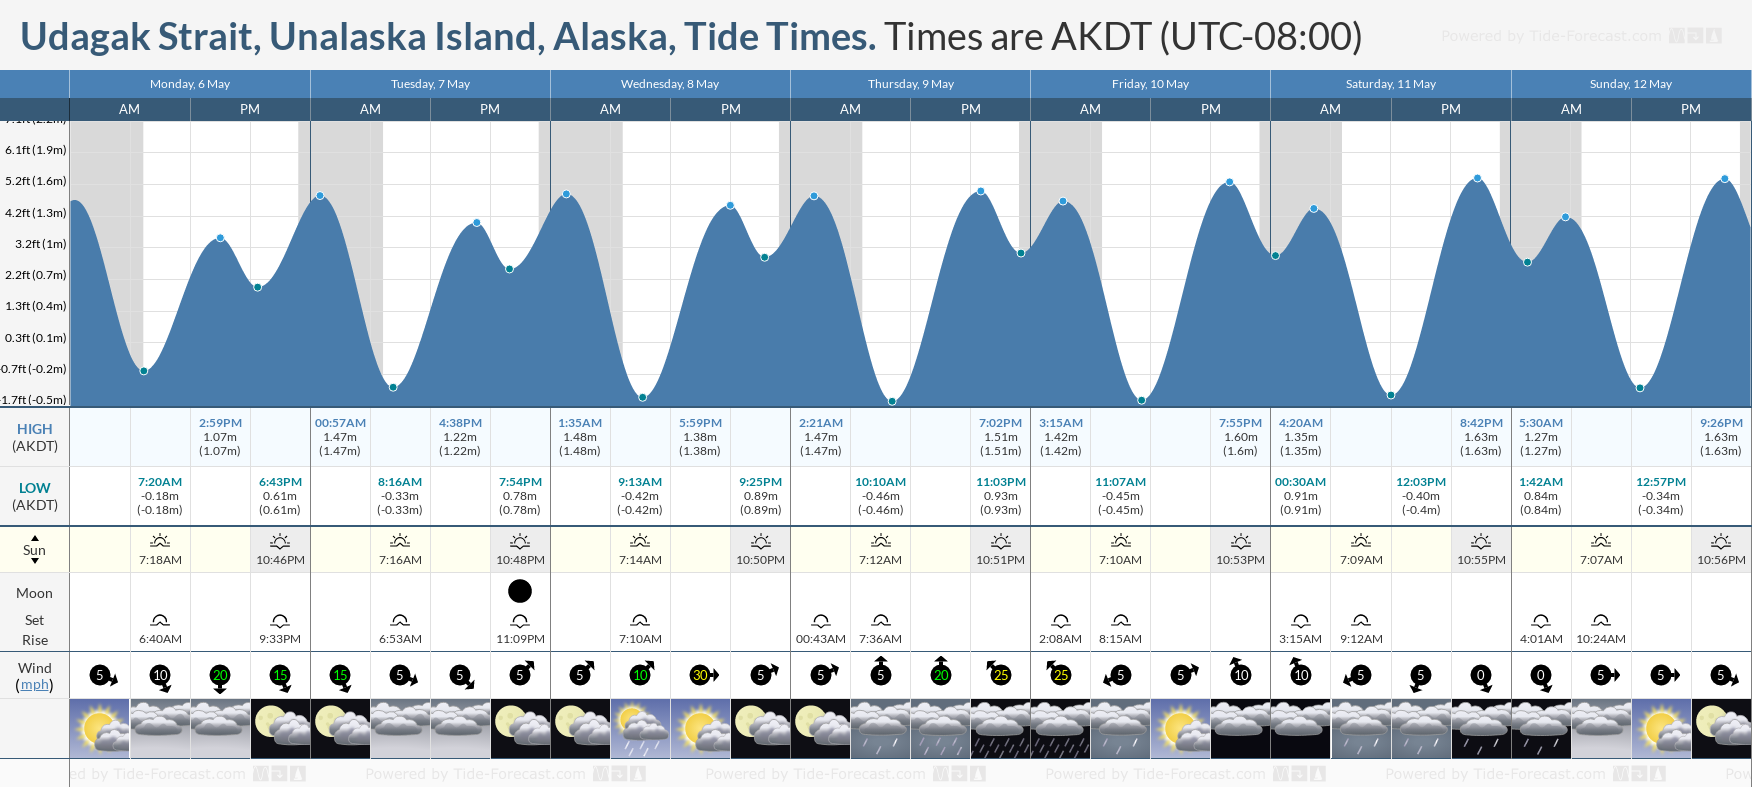 Udagak Strait, Unalaska Island, Alaska Tide Chart including high and low tide tide times for the next 7 days